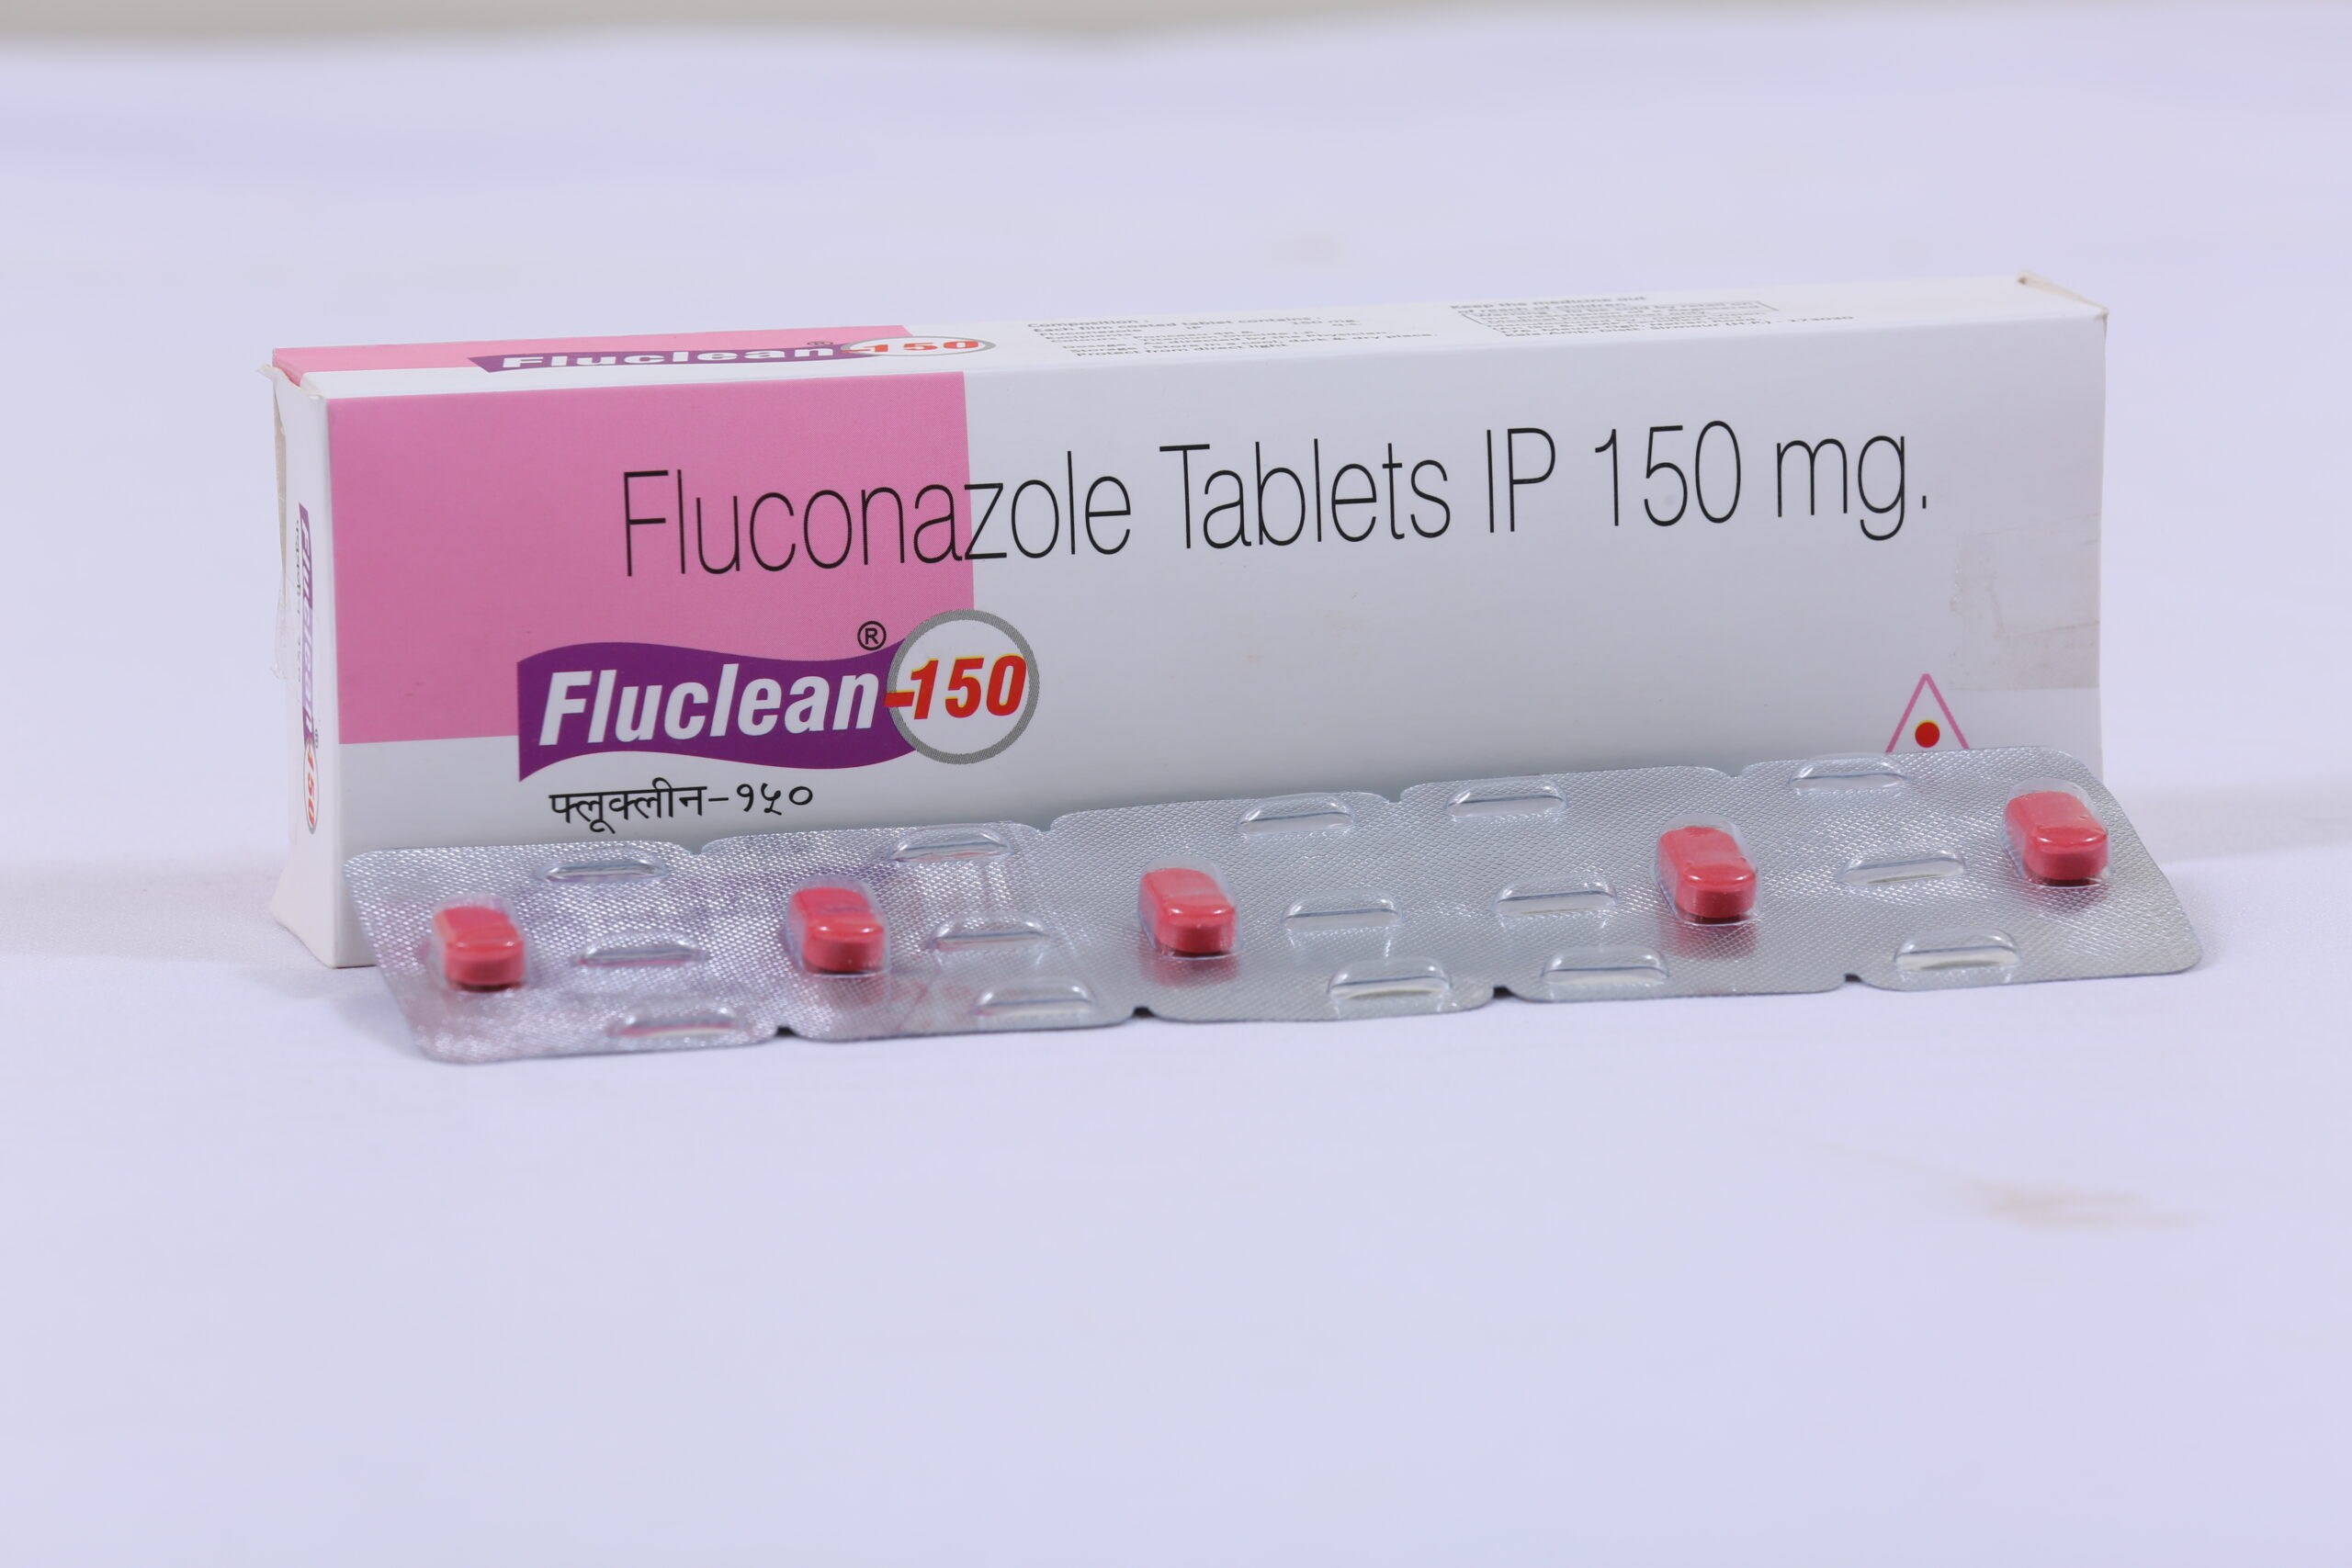 FLUCLEAN-150 (Fluconazole 150mg)